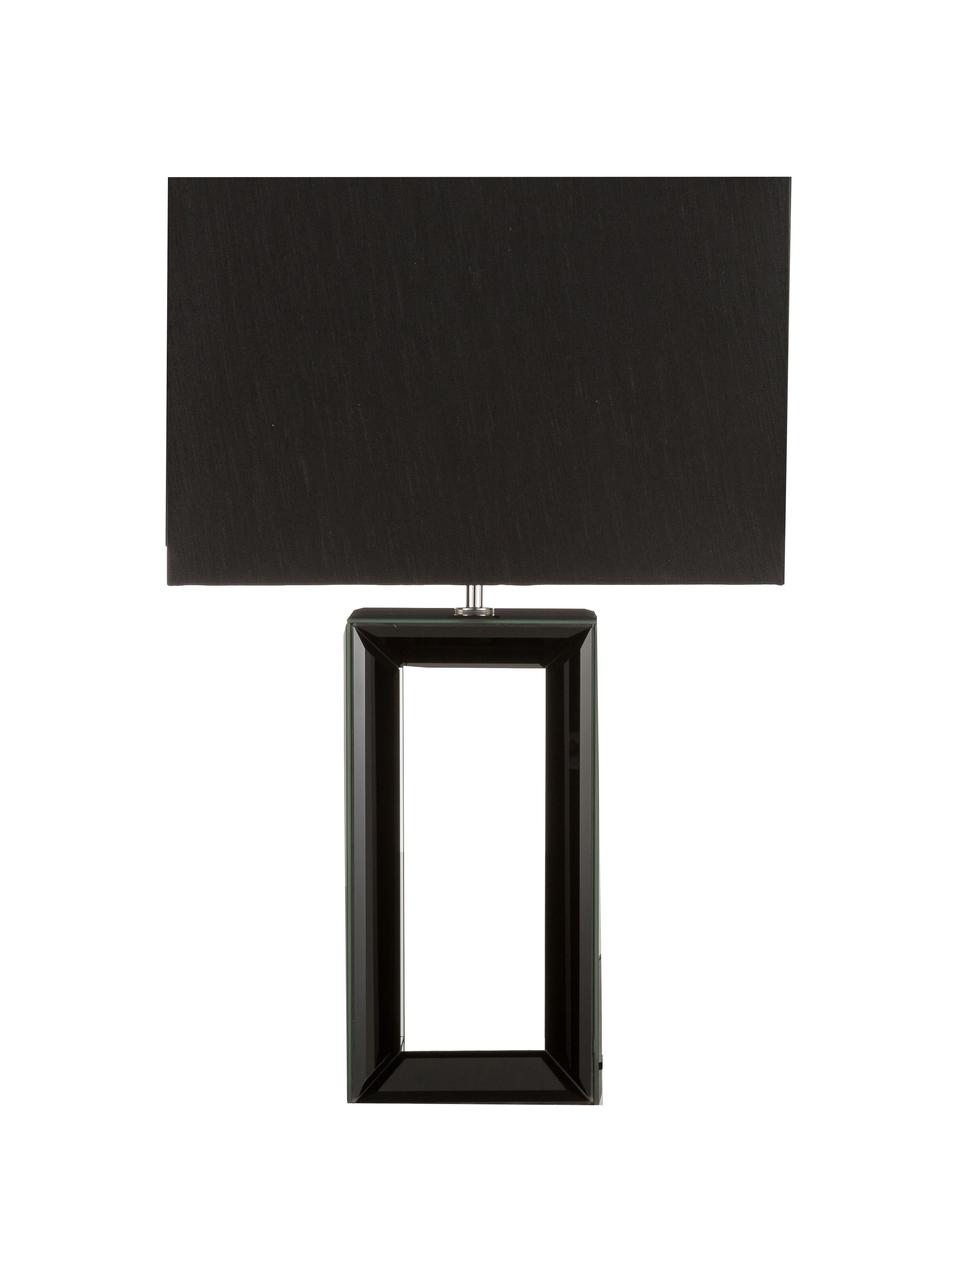 Veľká stolová lampa zo zrkadlového skla Serafina, Podstavec: čierna, zrkladlová<br>Tienidlo: čierna